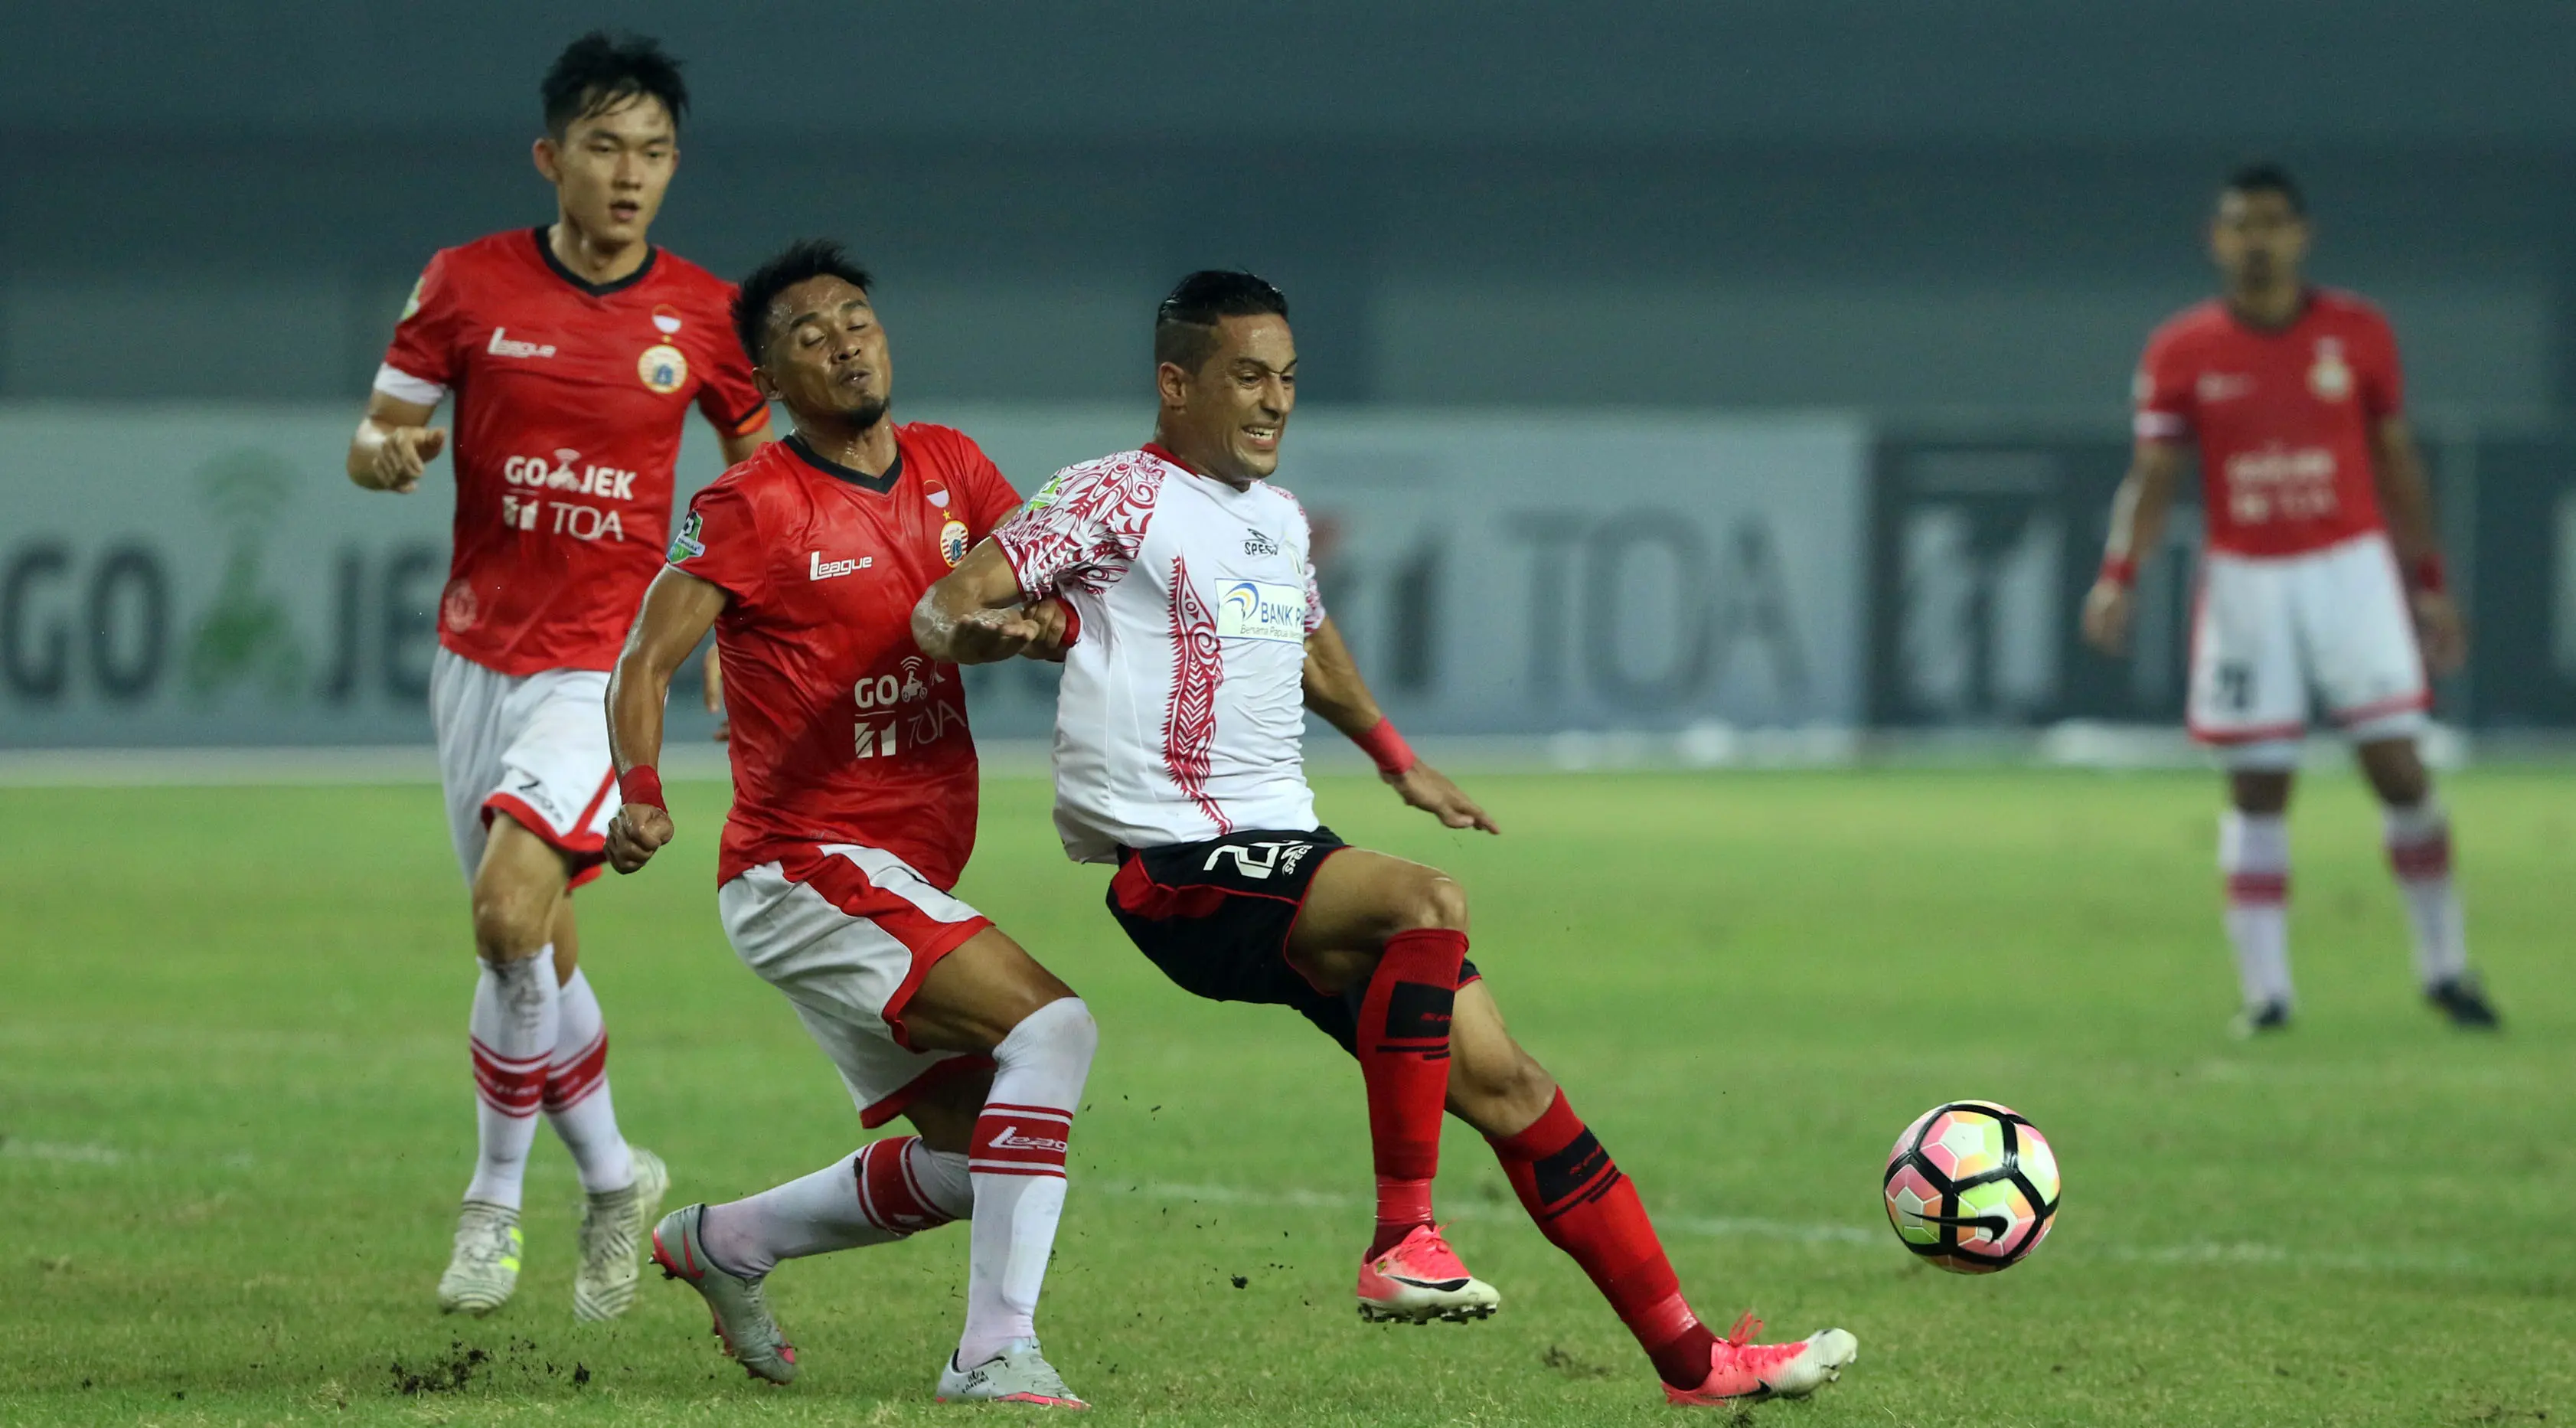 Striker Persipura Jayapura, Addison Alves (putih), terkena kartu merah pada laga melawan Persija Jakarta di Stadion Patriot, Bekasi, Sabtu (8/7/2017). Liputan6.com/Helmi Fithriansyah)